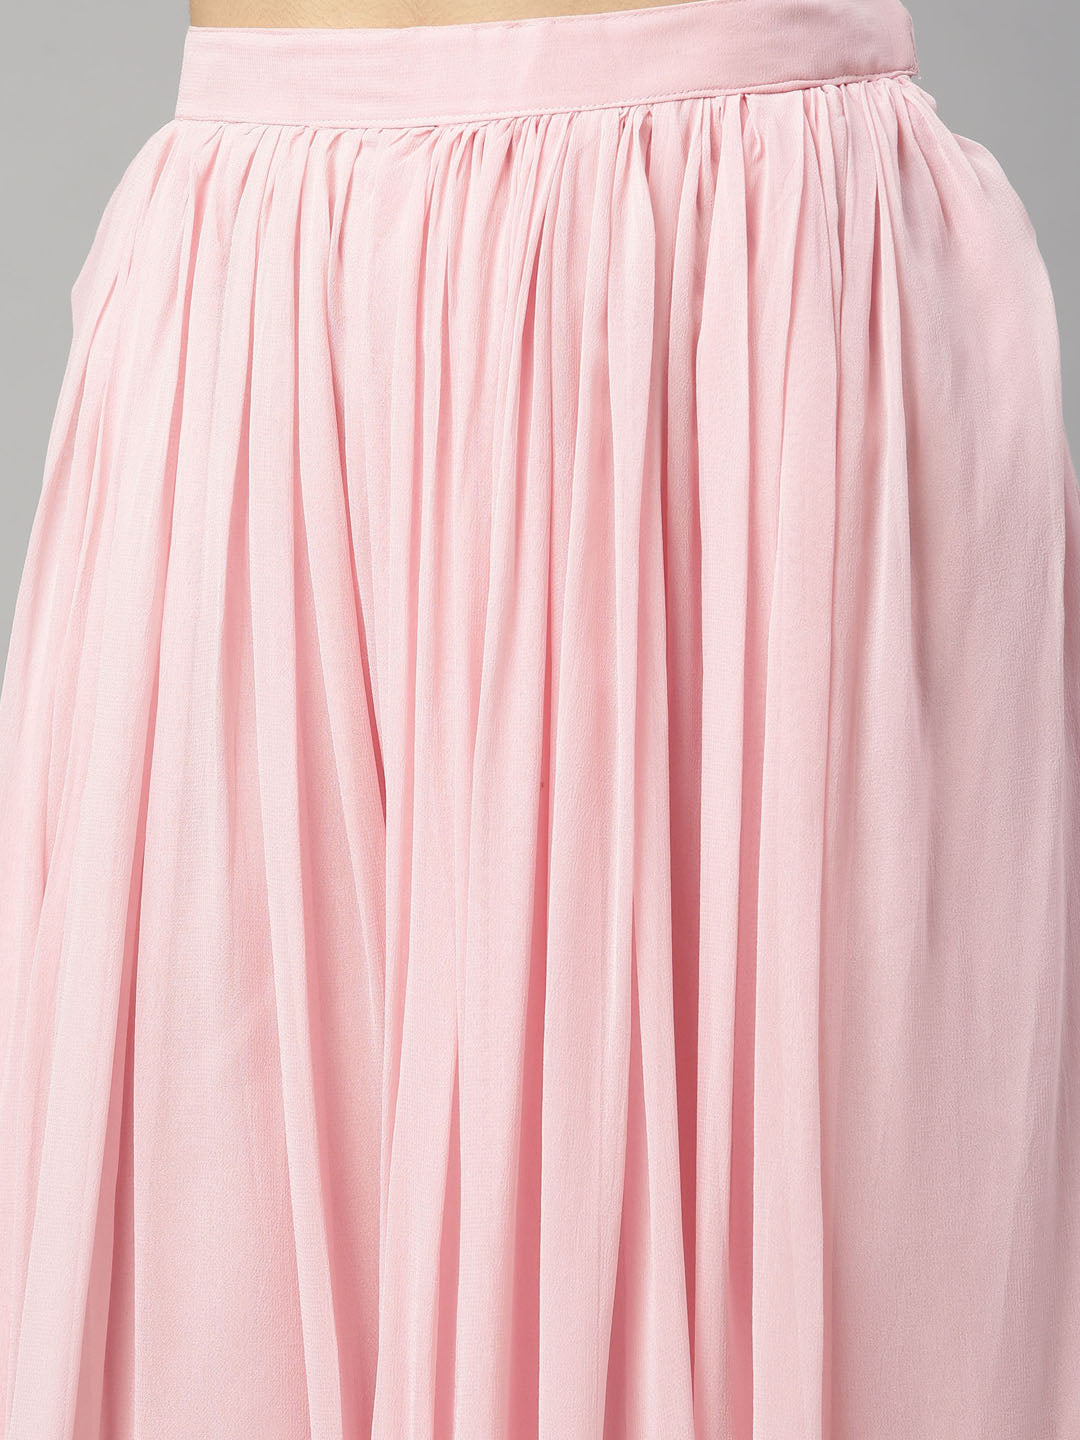 Neeru's Pink Color Georgette Fabric Suit-Fusion